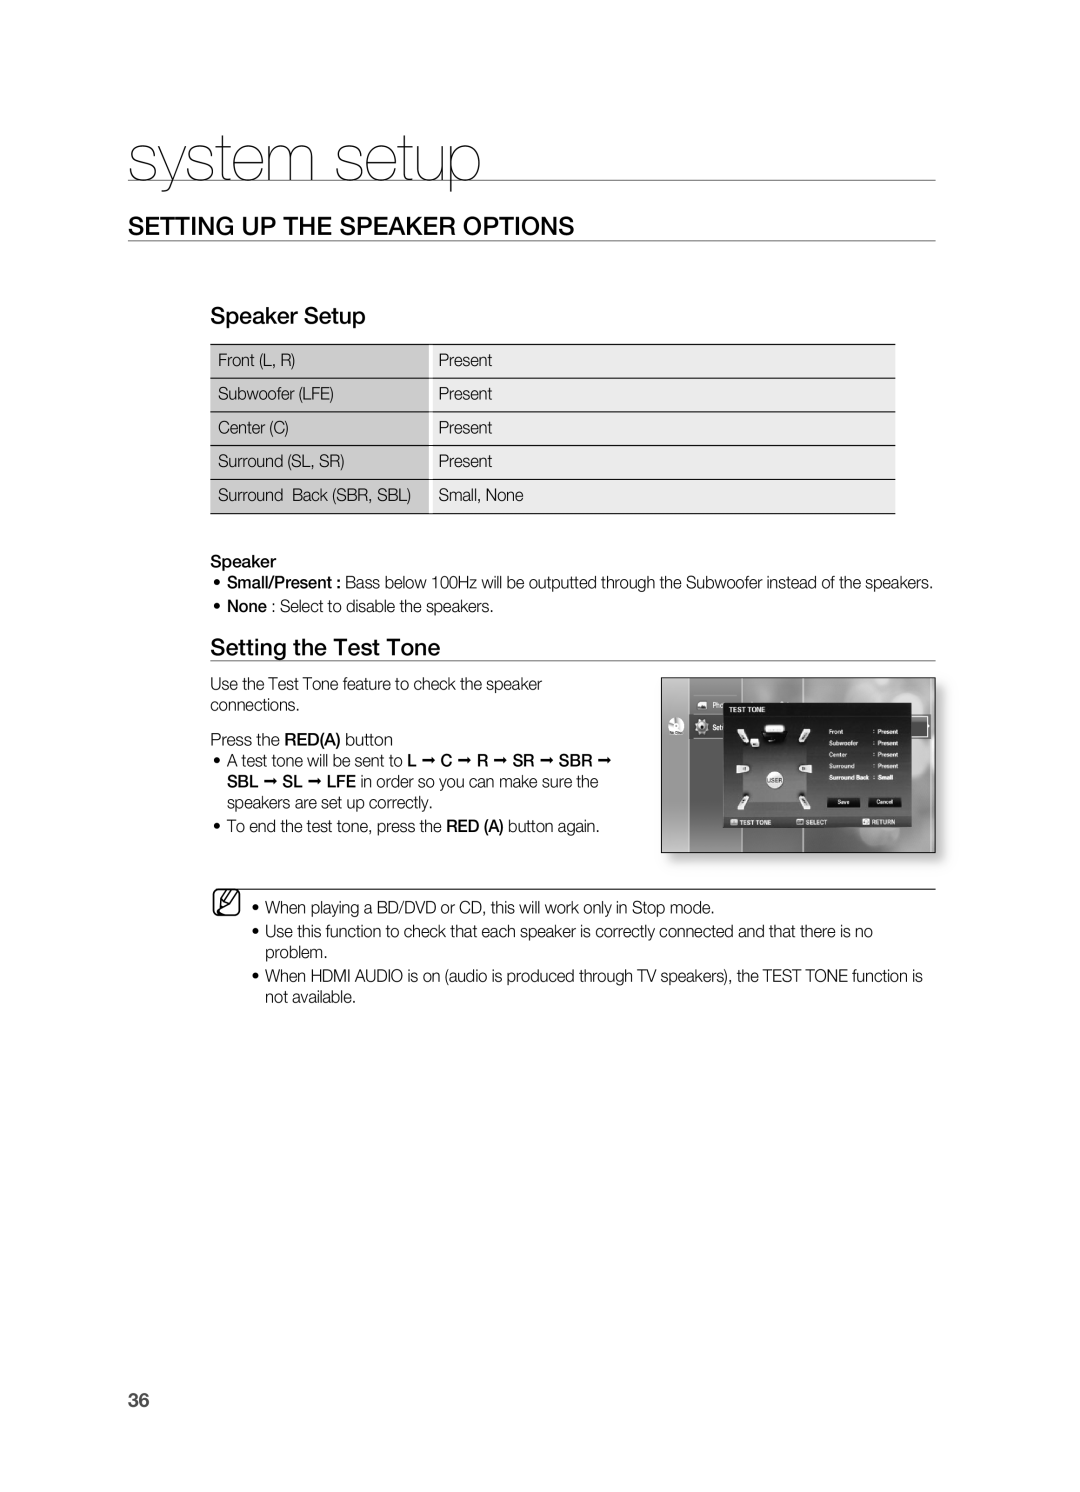 Samsung AH68-02019S manual Speaker Setup, Setting the Test Tone, system setup, SETTIng UP THE SPEAKER OPTIOnS 